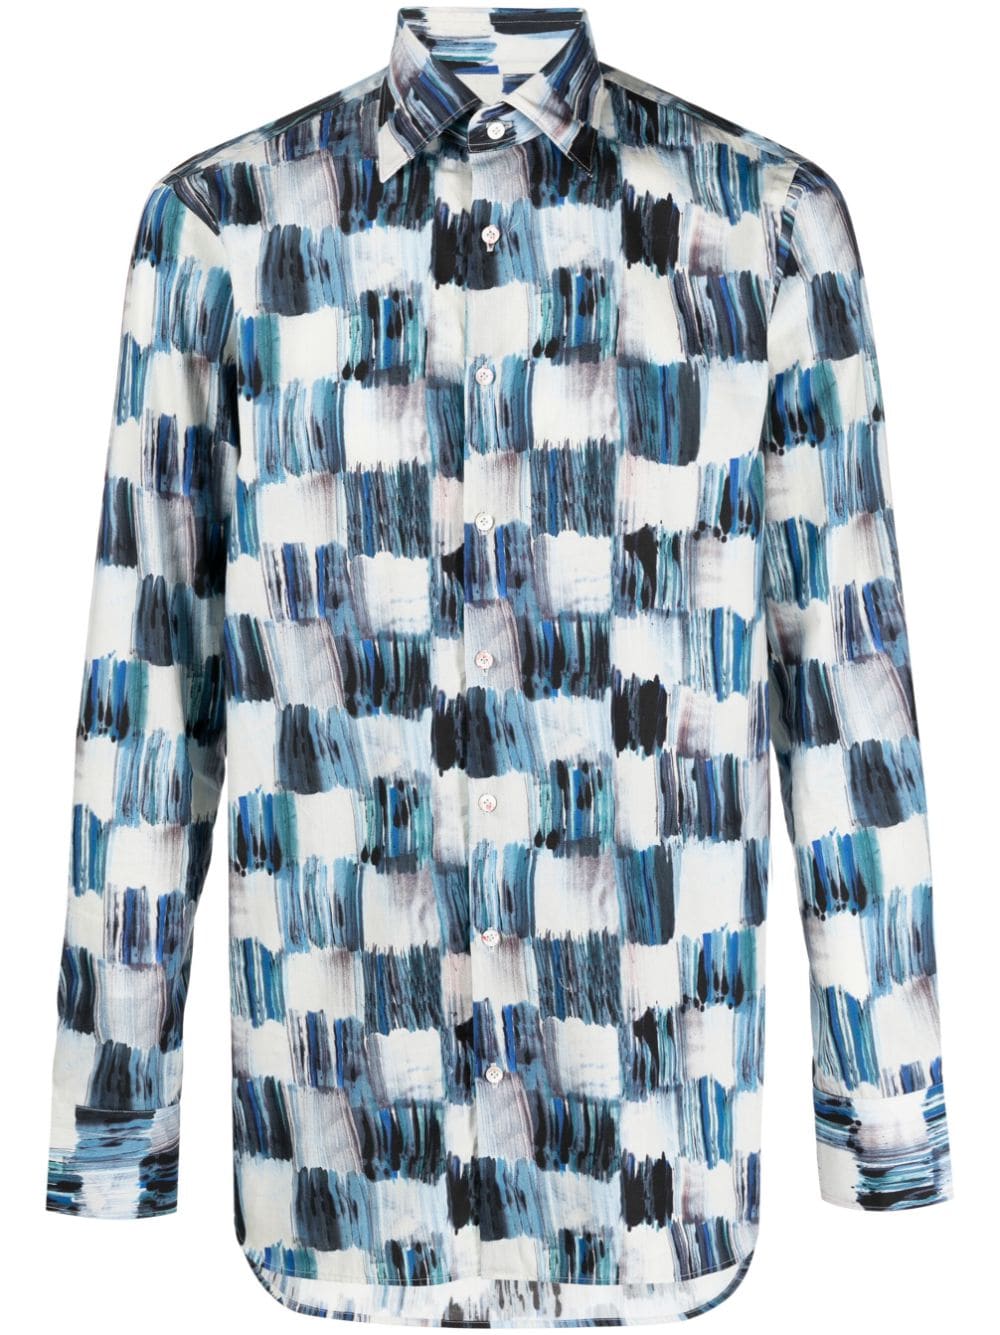 GABRIELE PASINI Italian Cotton Shirt in Checkerboard Print